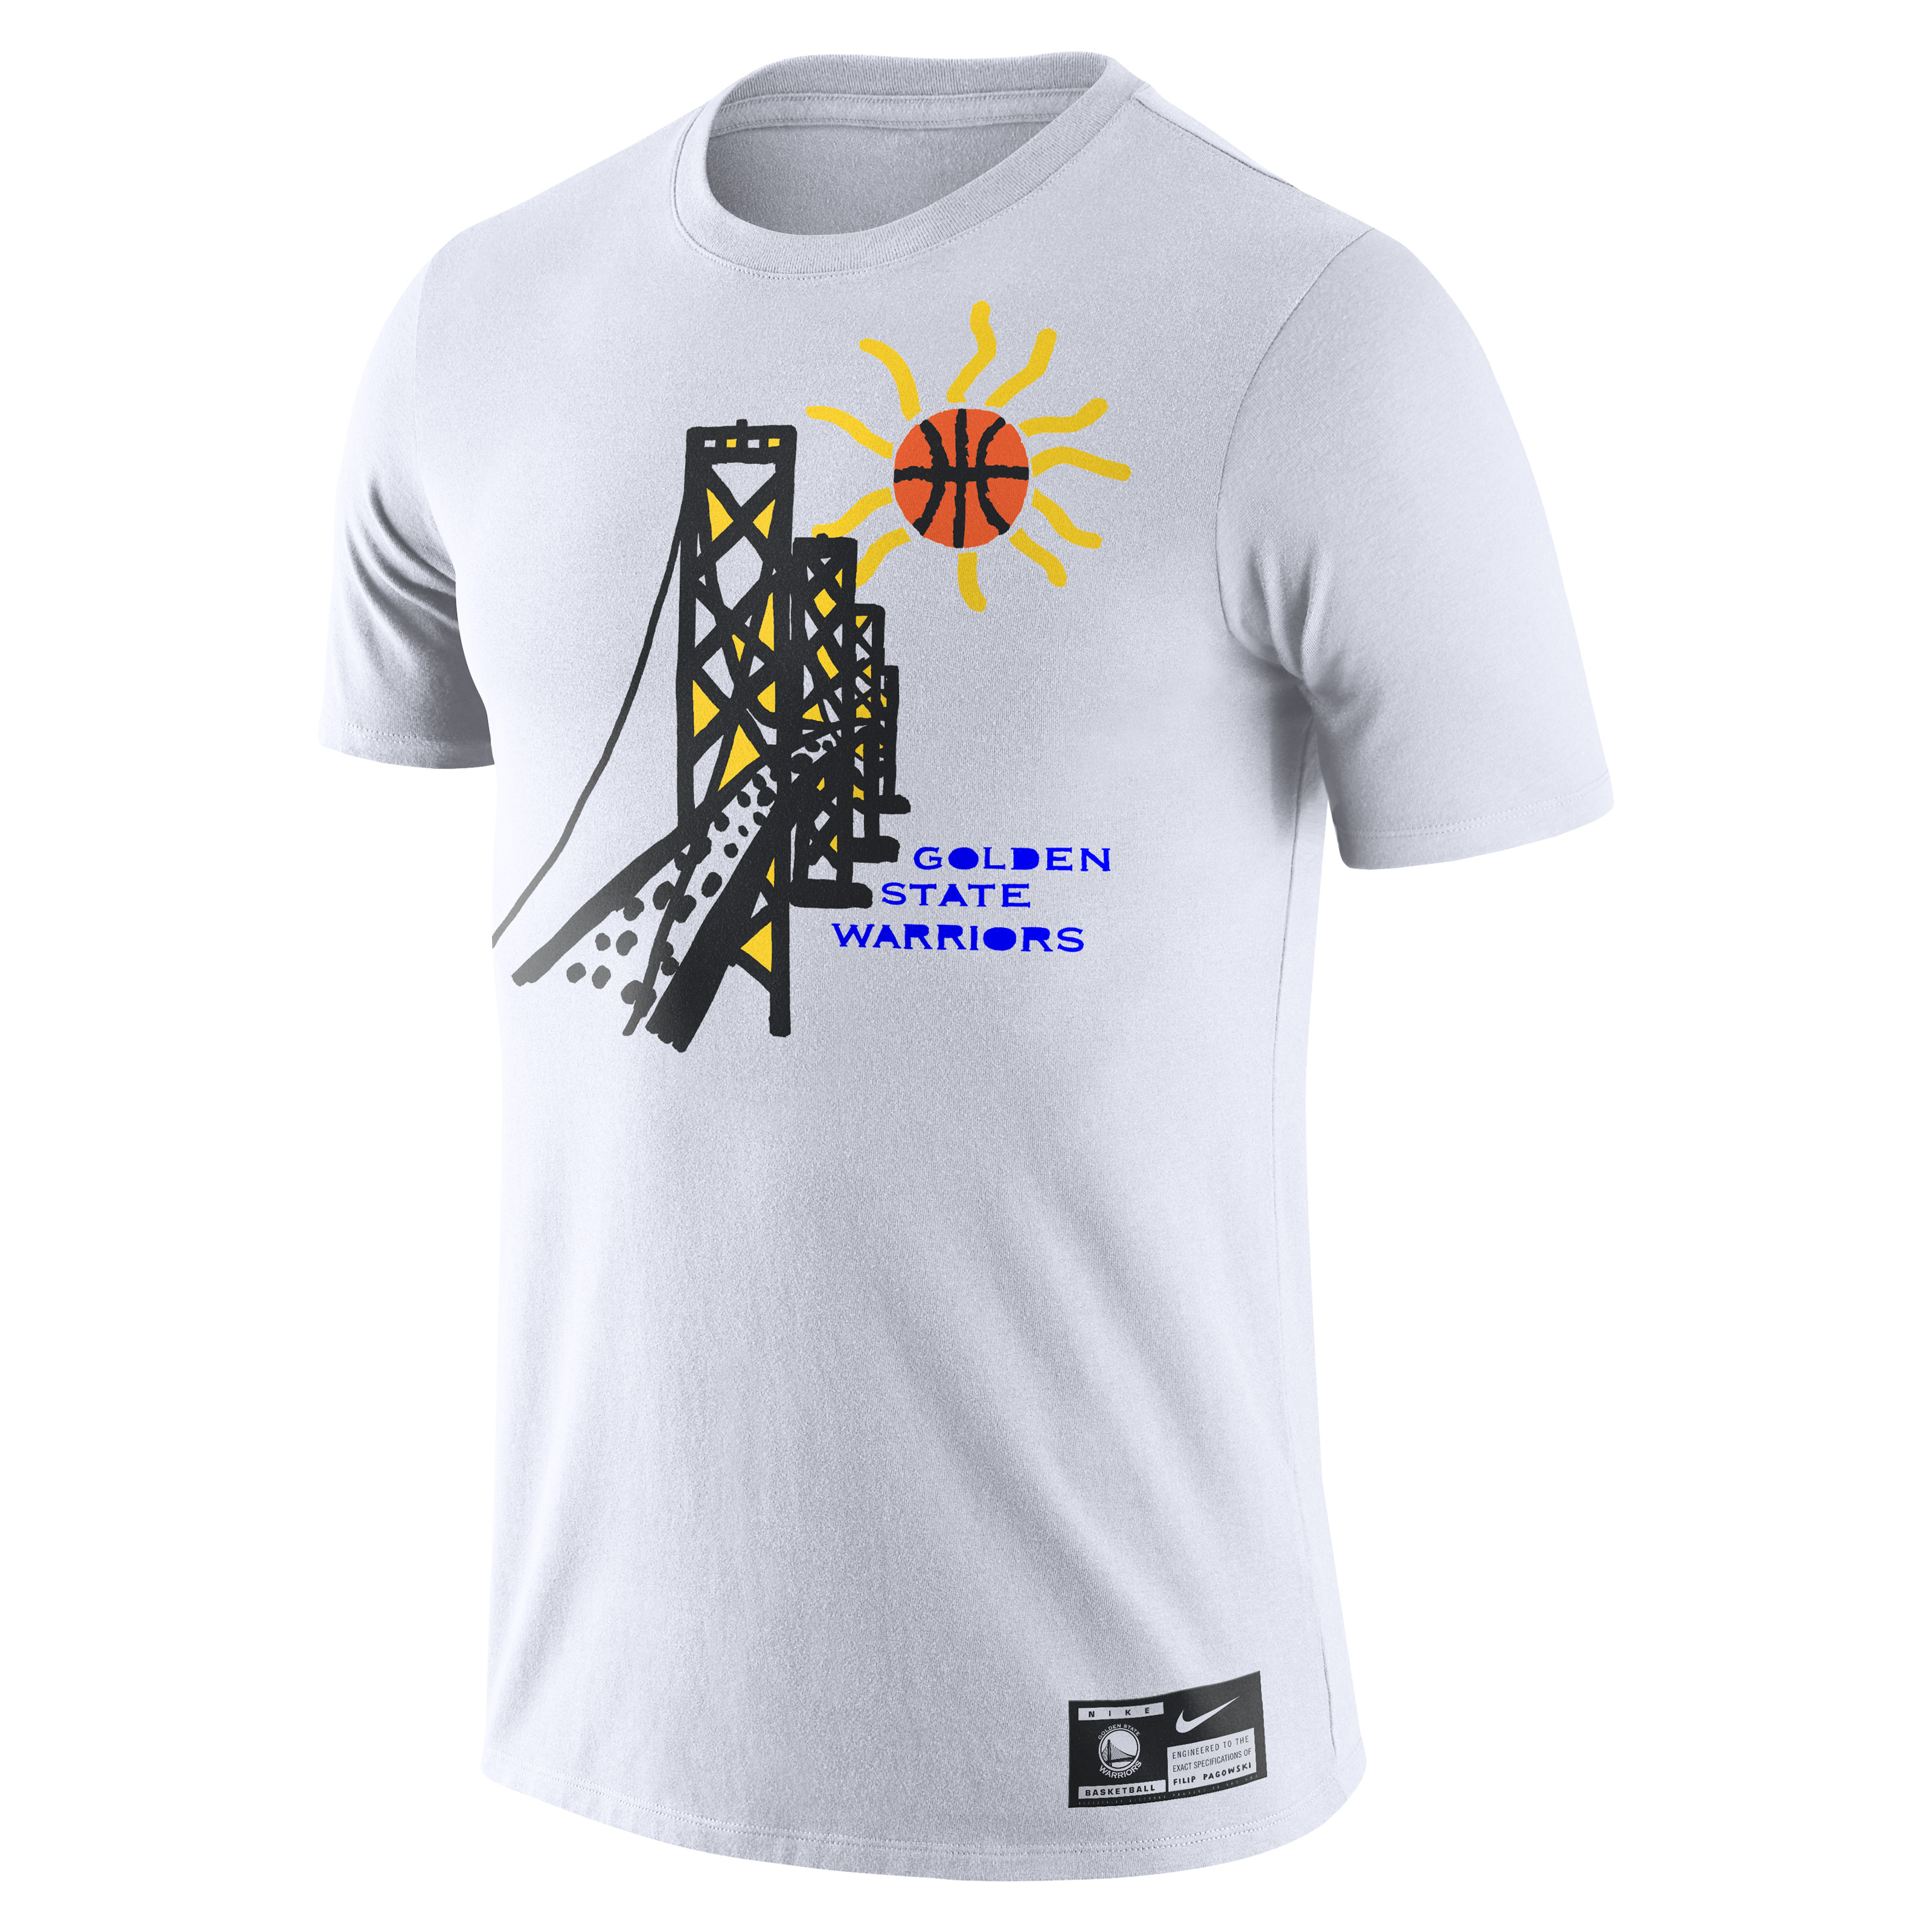 Filip Pagowski Nike T shirt &#x27;Golden State Warriors&#x27;